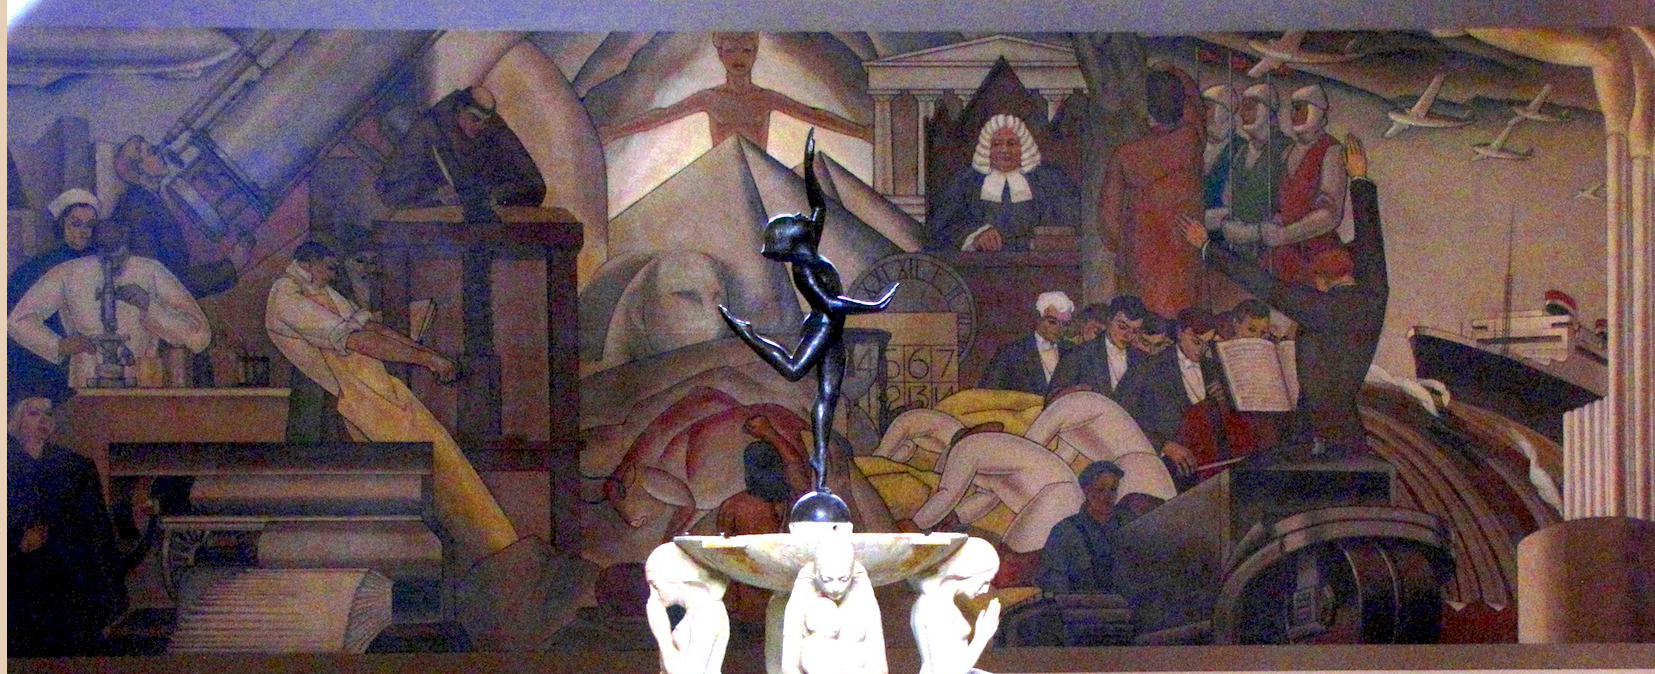 The Progress of Man, 1935, Baranceanu, mural